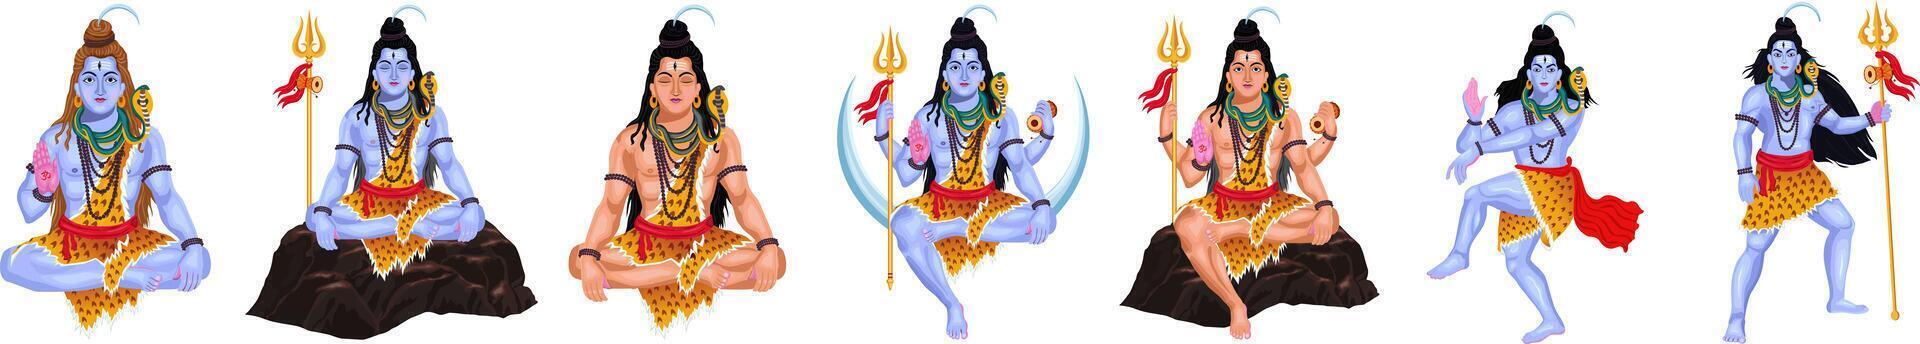 Lord Shiva Illustration For Happy Maha Shivratri, Social Media Post, Web Banner, Greetings, Status vector